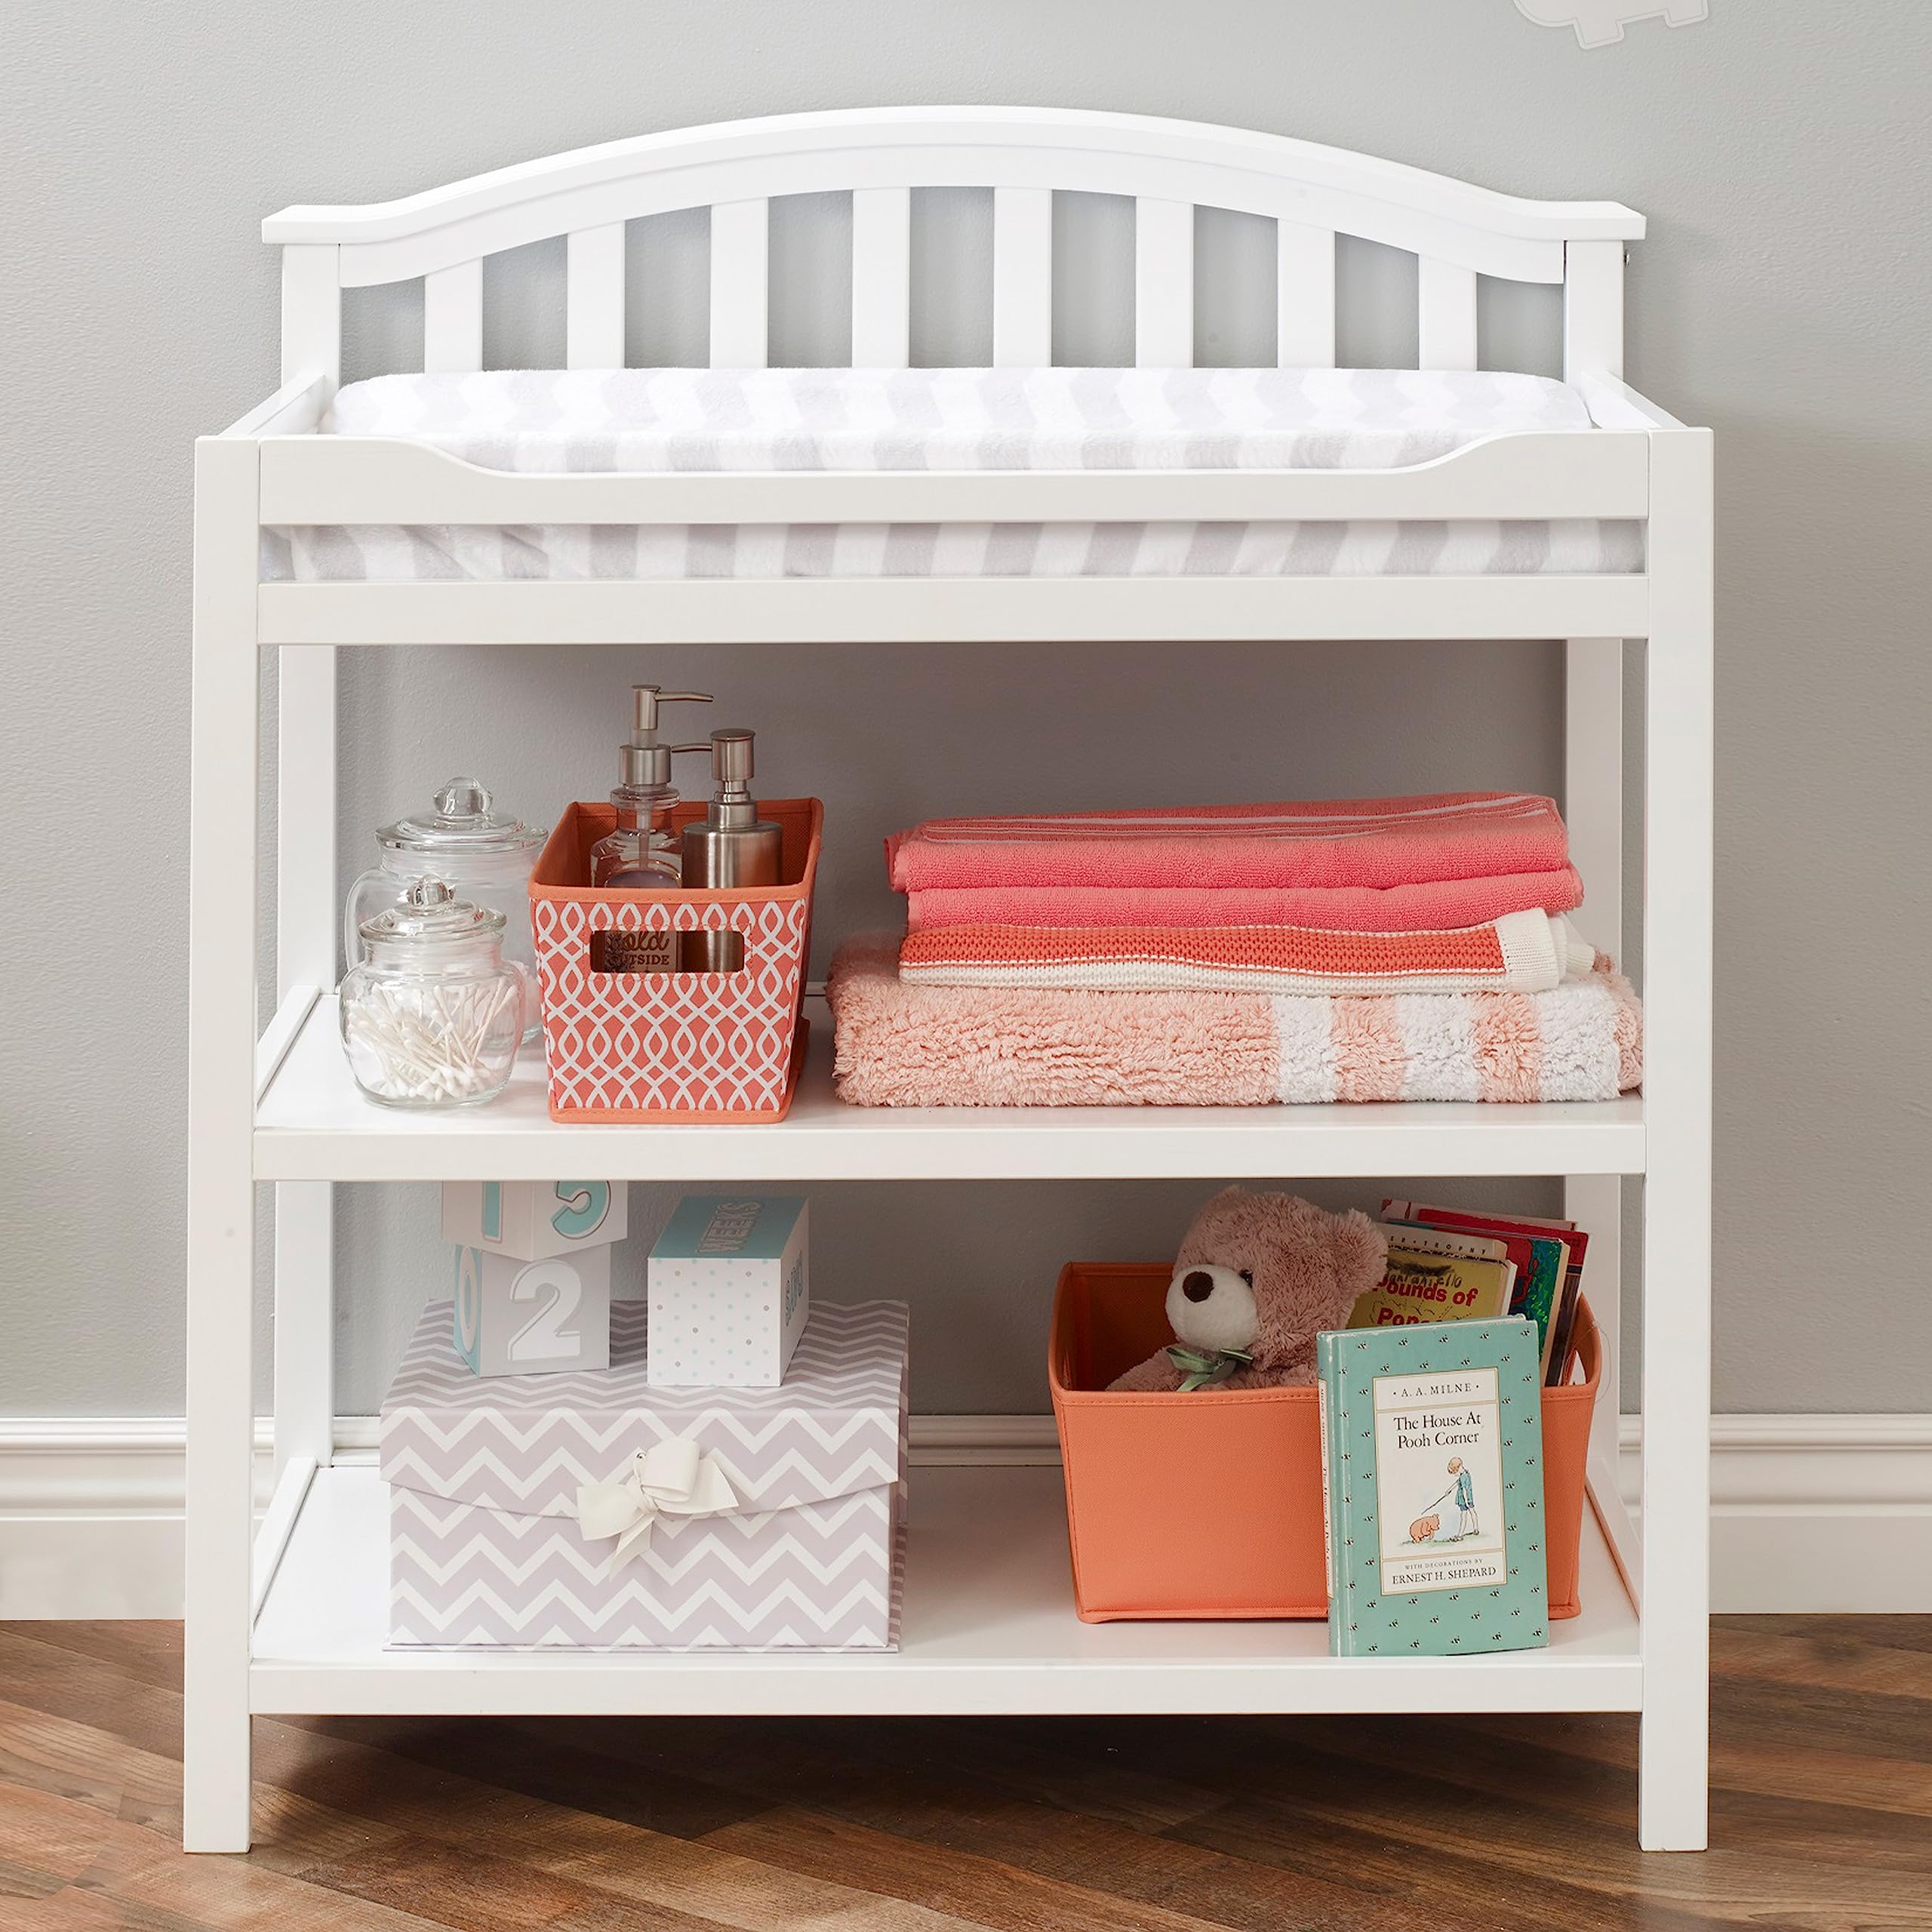 Sorelle Furniture Berkley Baby Dresser – Dresser for Nursery, Kids Bedroom Furniture, Dresser Drawers, Nightstand for Child’s Room with Drawers, Nursery Furniture for Infant -White